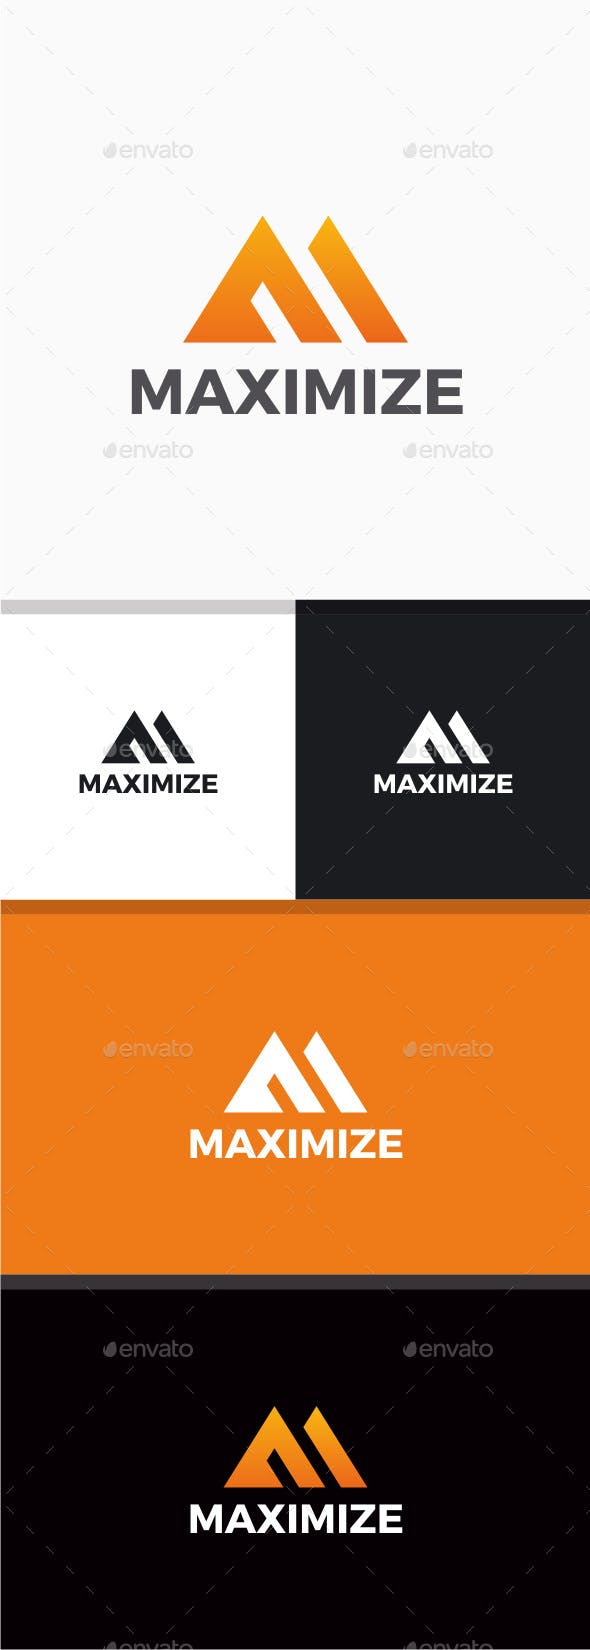 Orange Triangle M Logo - Maximize M Logo